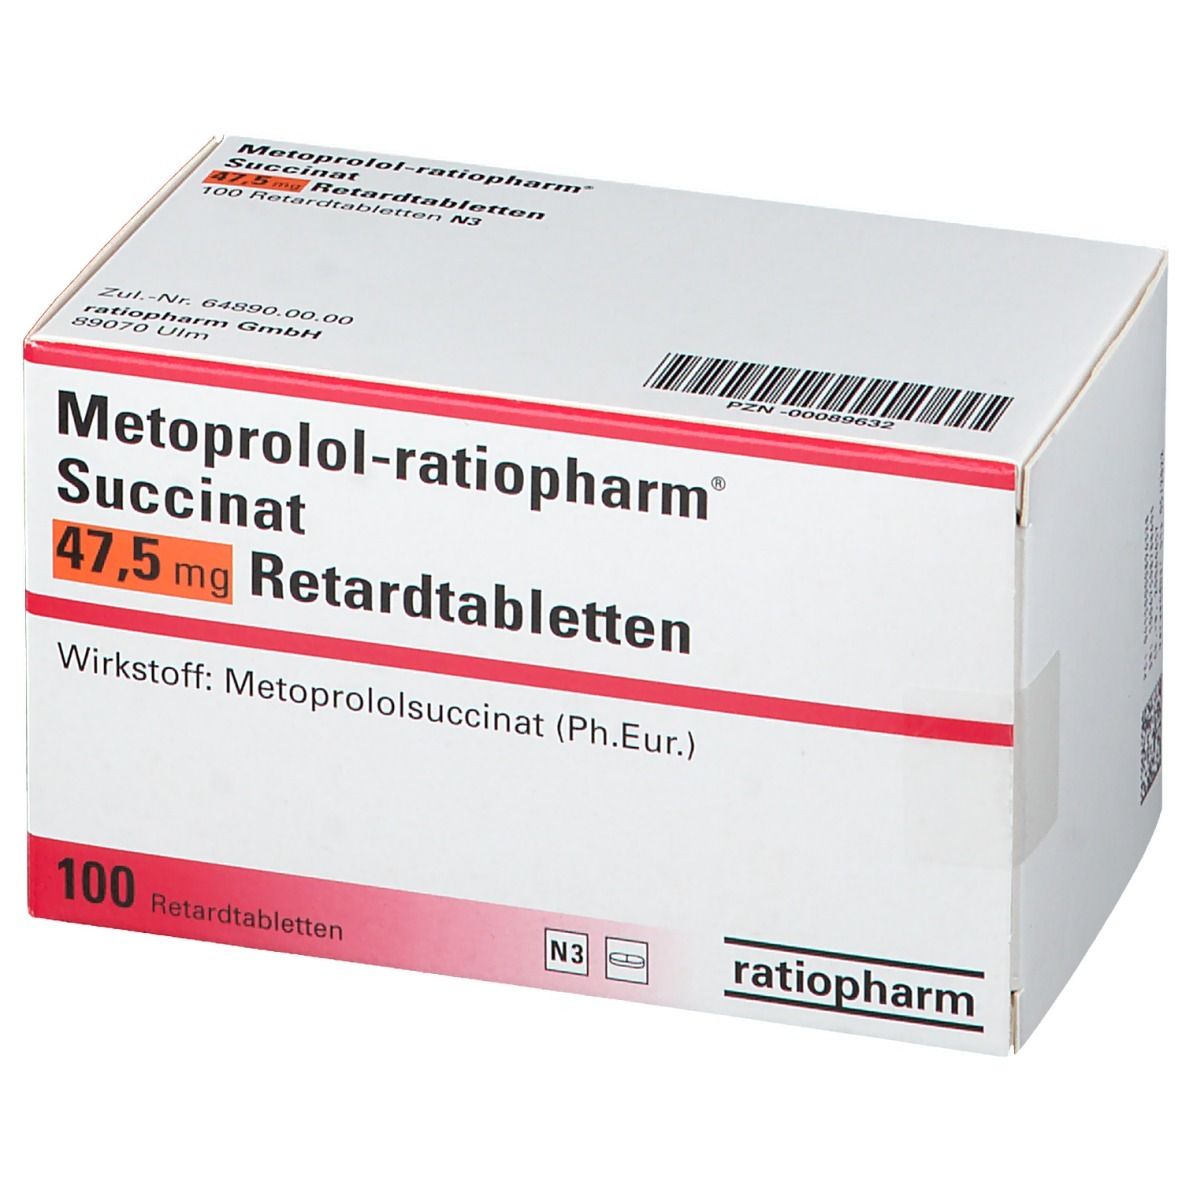 Metoprolol-ratiopharm® Succinat 47,5 mg